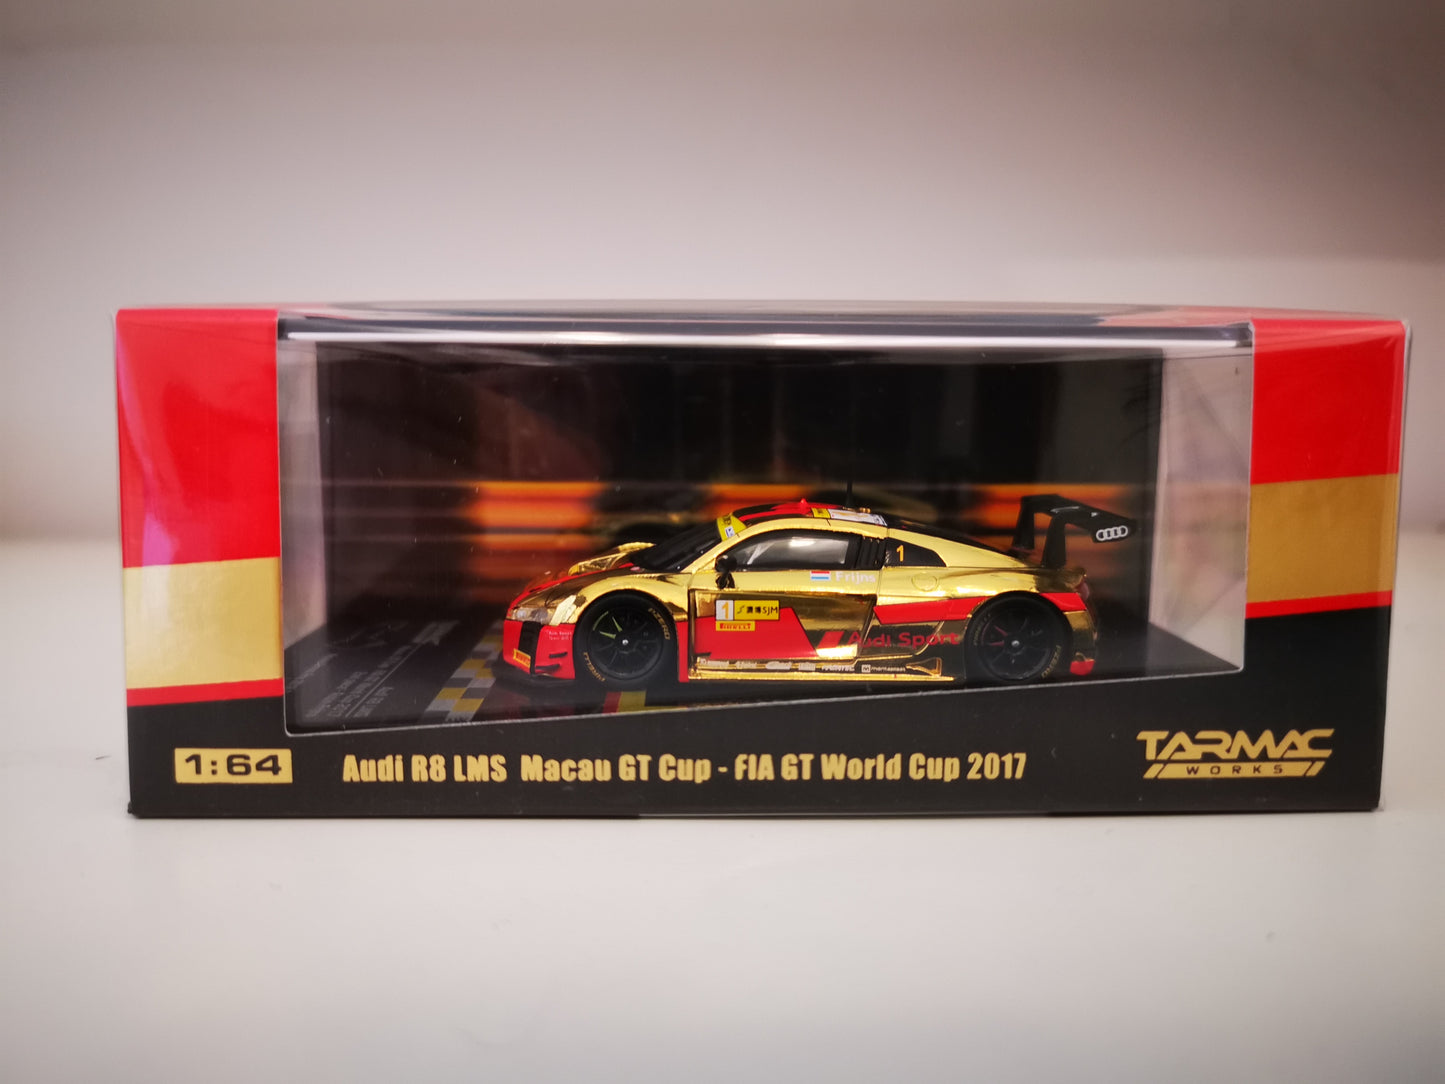 Tarmacworks Audi R8 LMS Macau GT Cup- FIA GT World Cup 2017